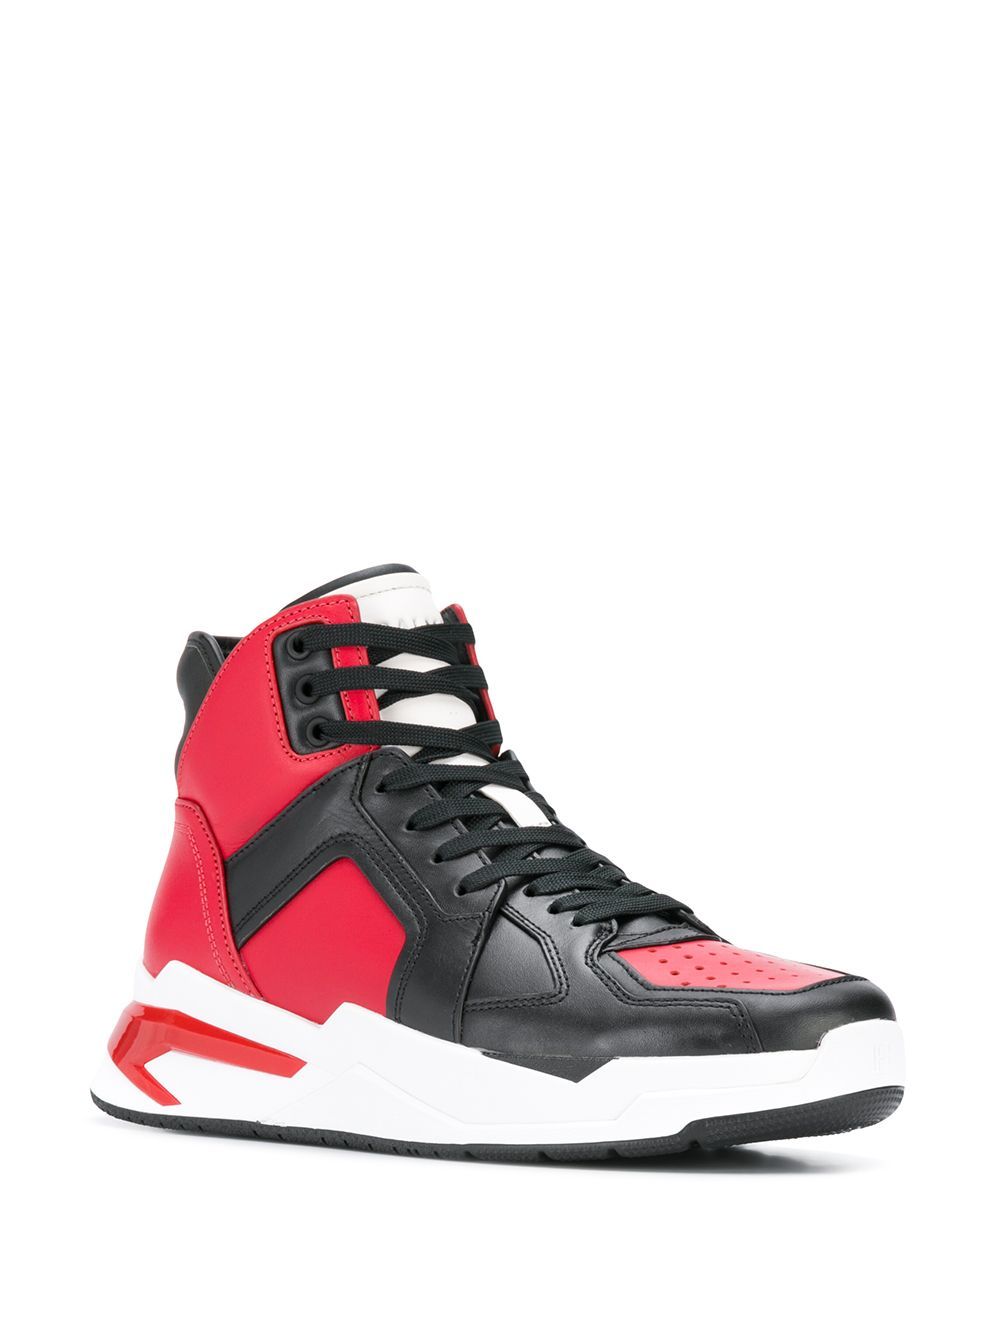 Balmain B-BALL sneakers black/red - MAISONDEFASHION.COM